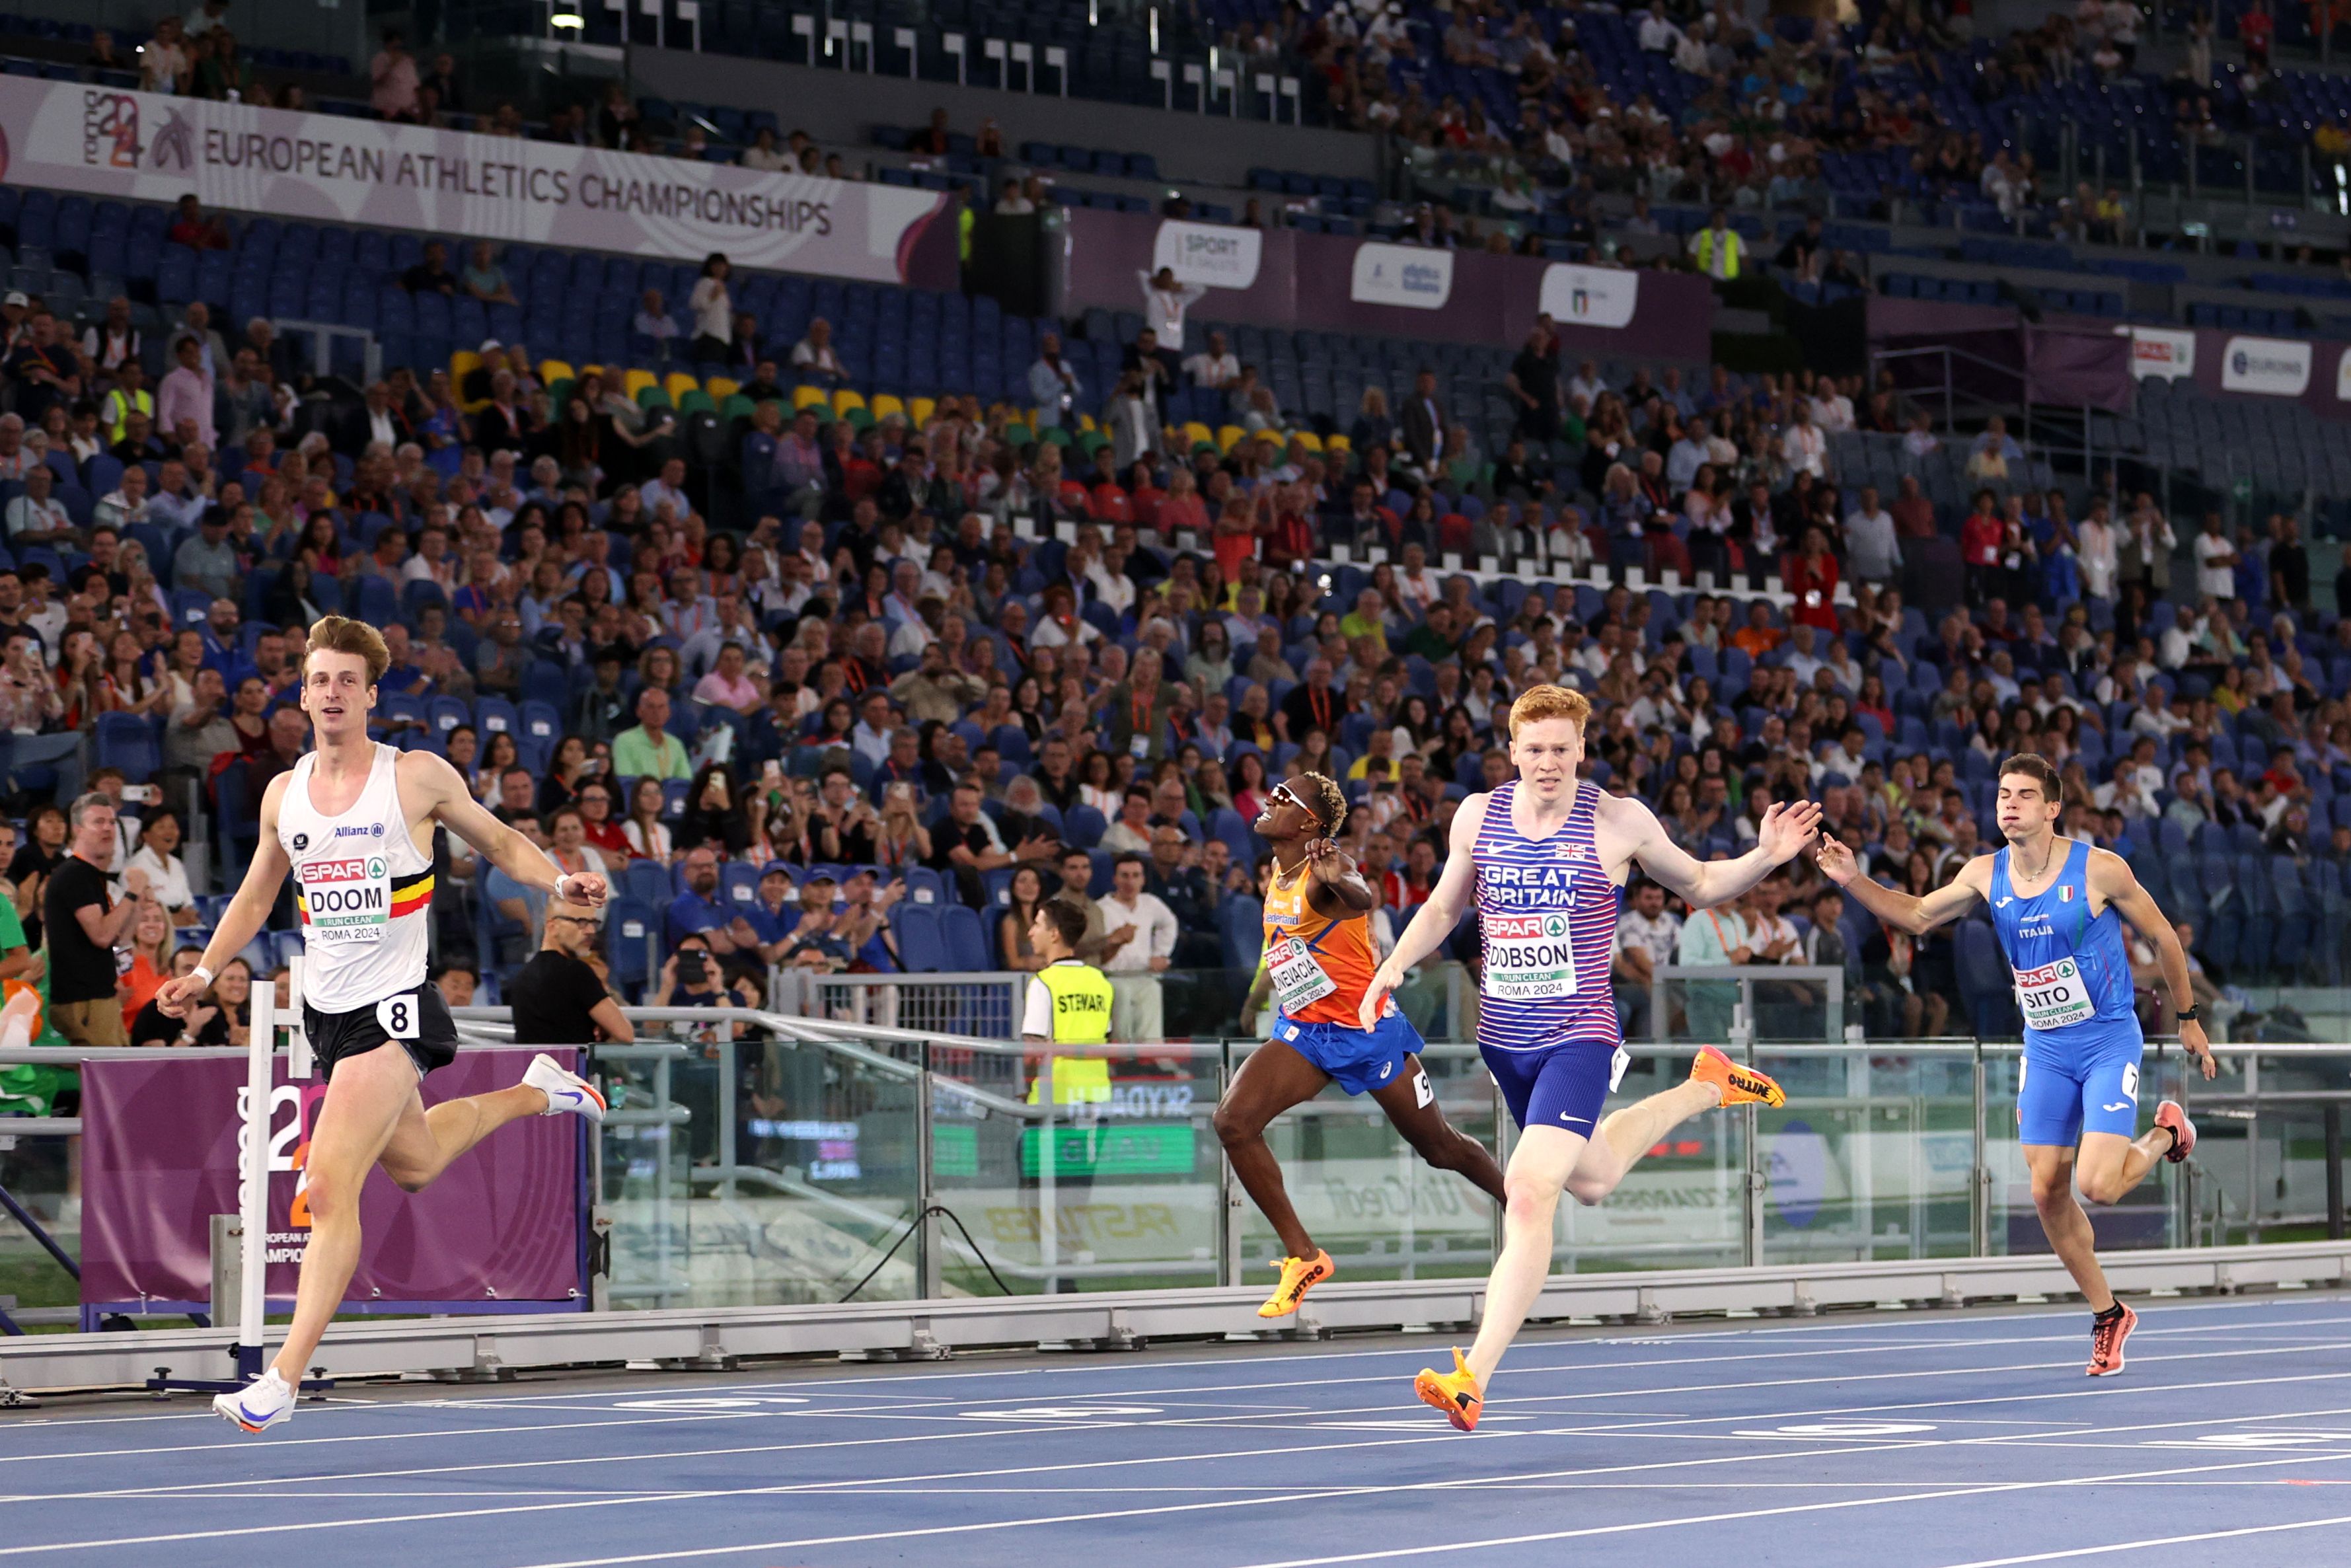 Alexander Doom wins the European 400m title in Rome